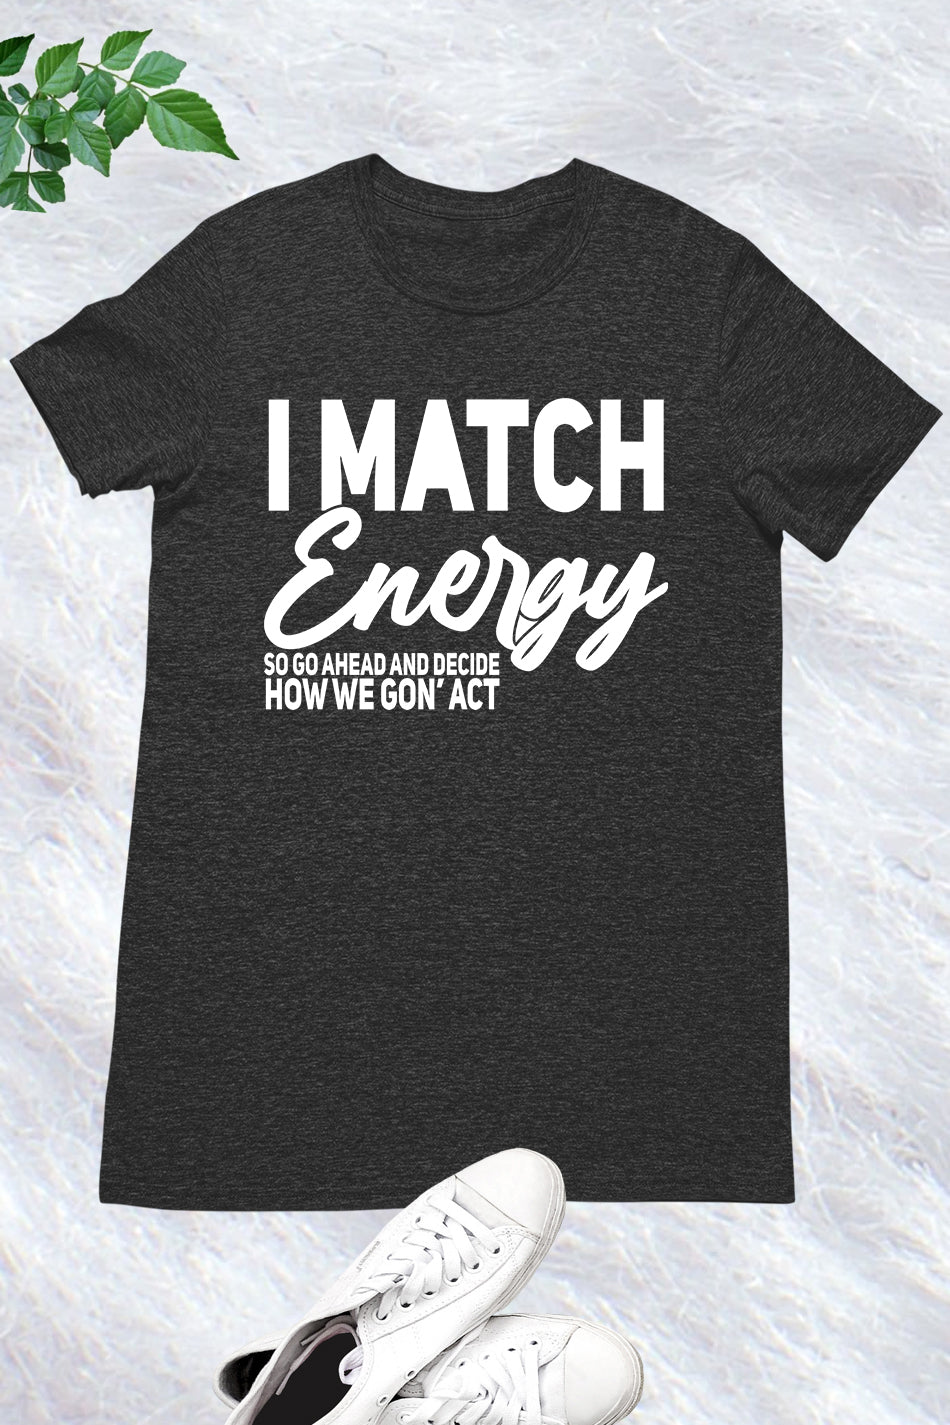 I Match Energy T Shirts